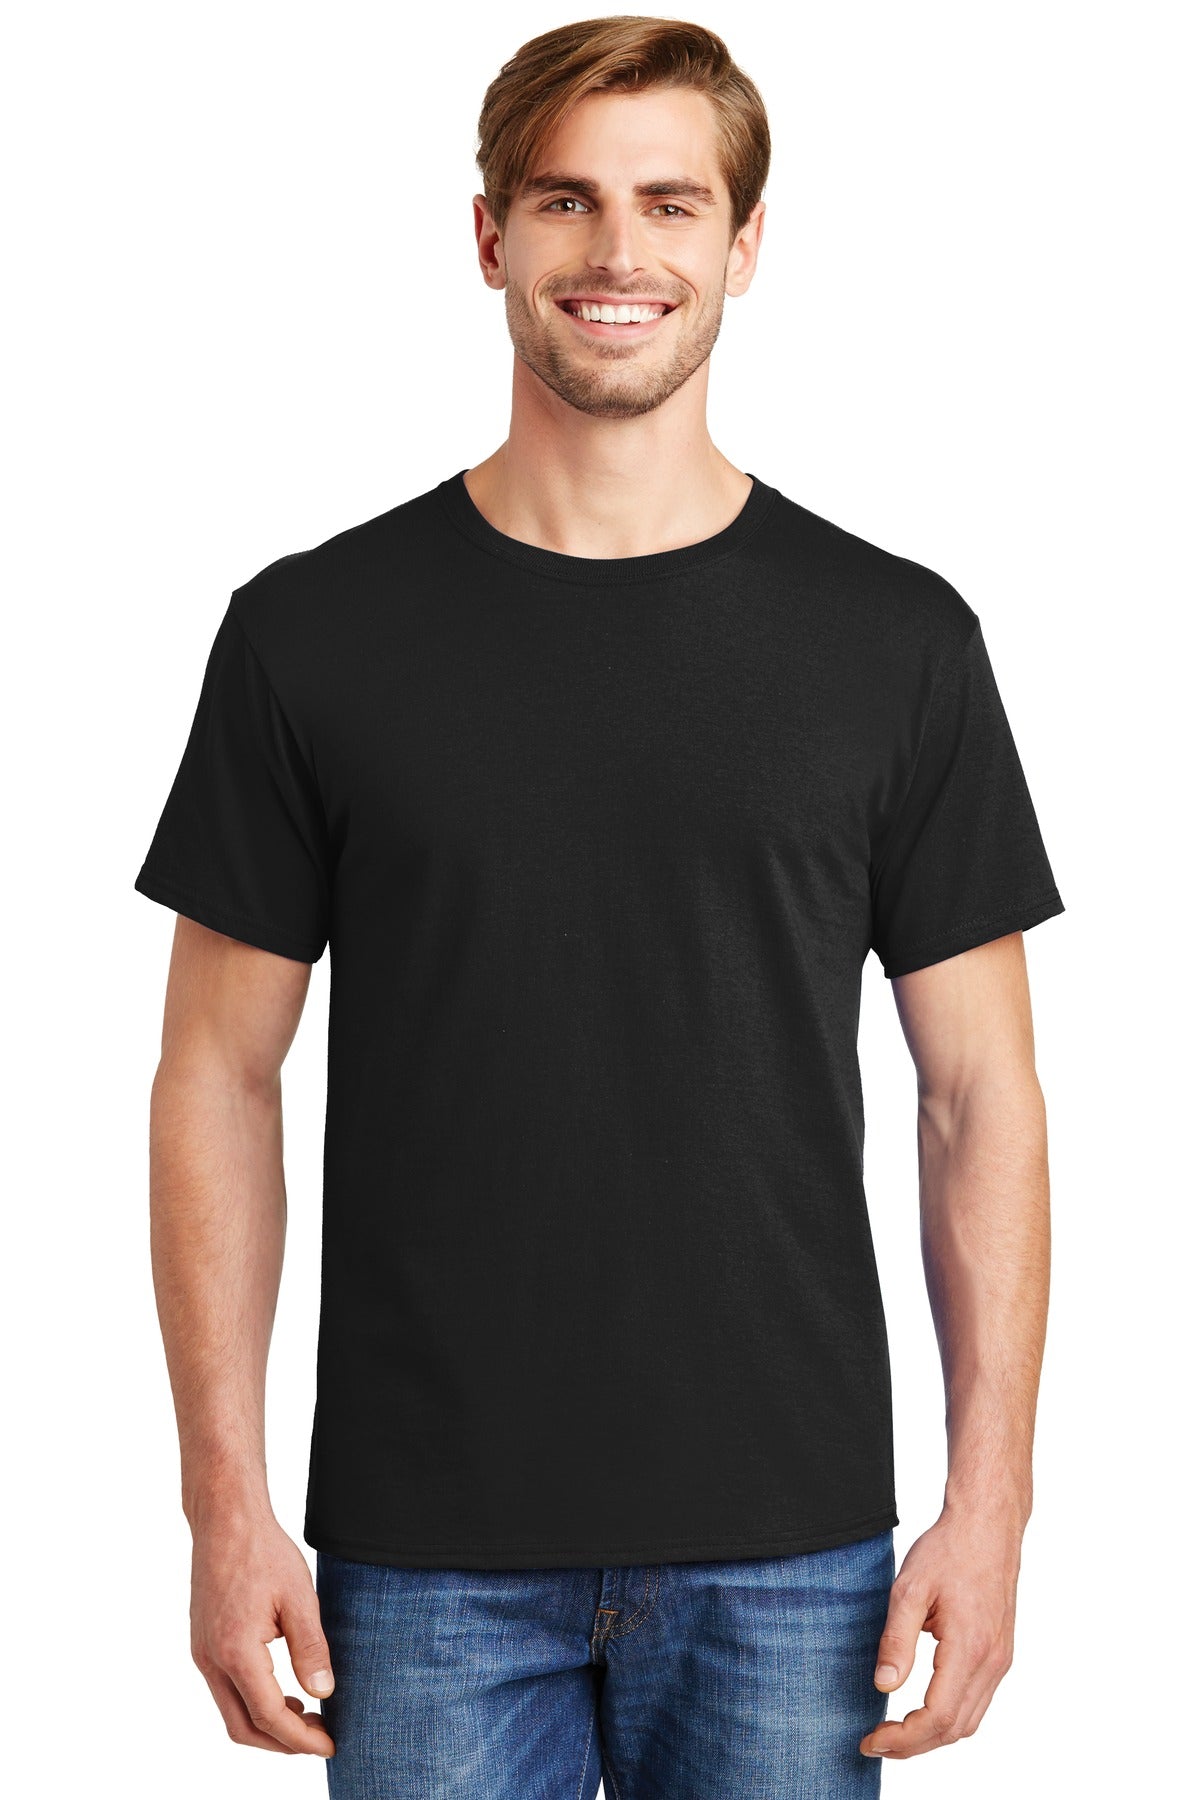 Hanes® - Essential-T 100% Cotton T-Shirt. 5280 [Black] - DFW Impression